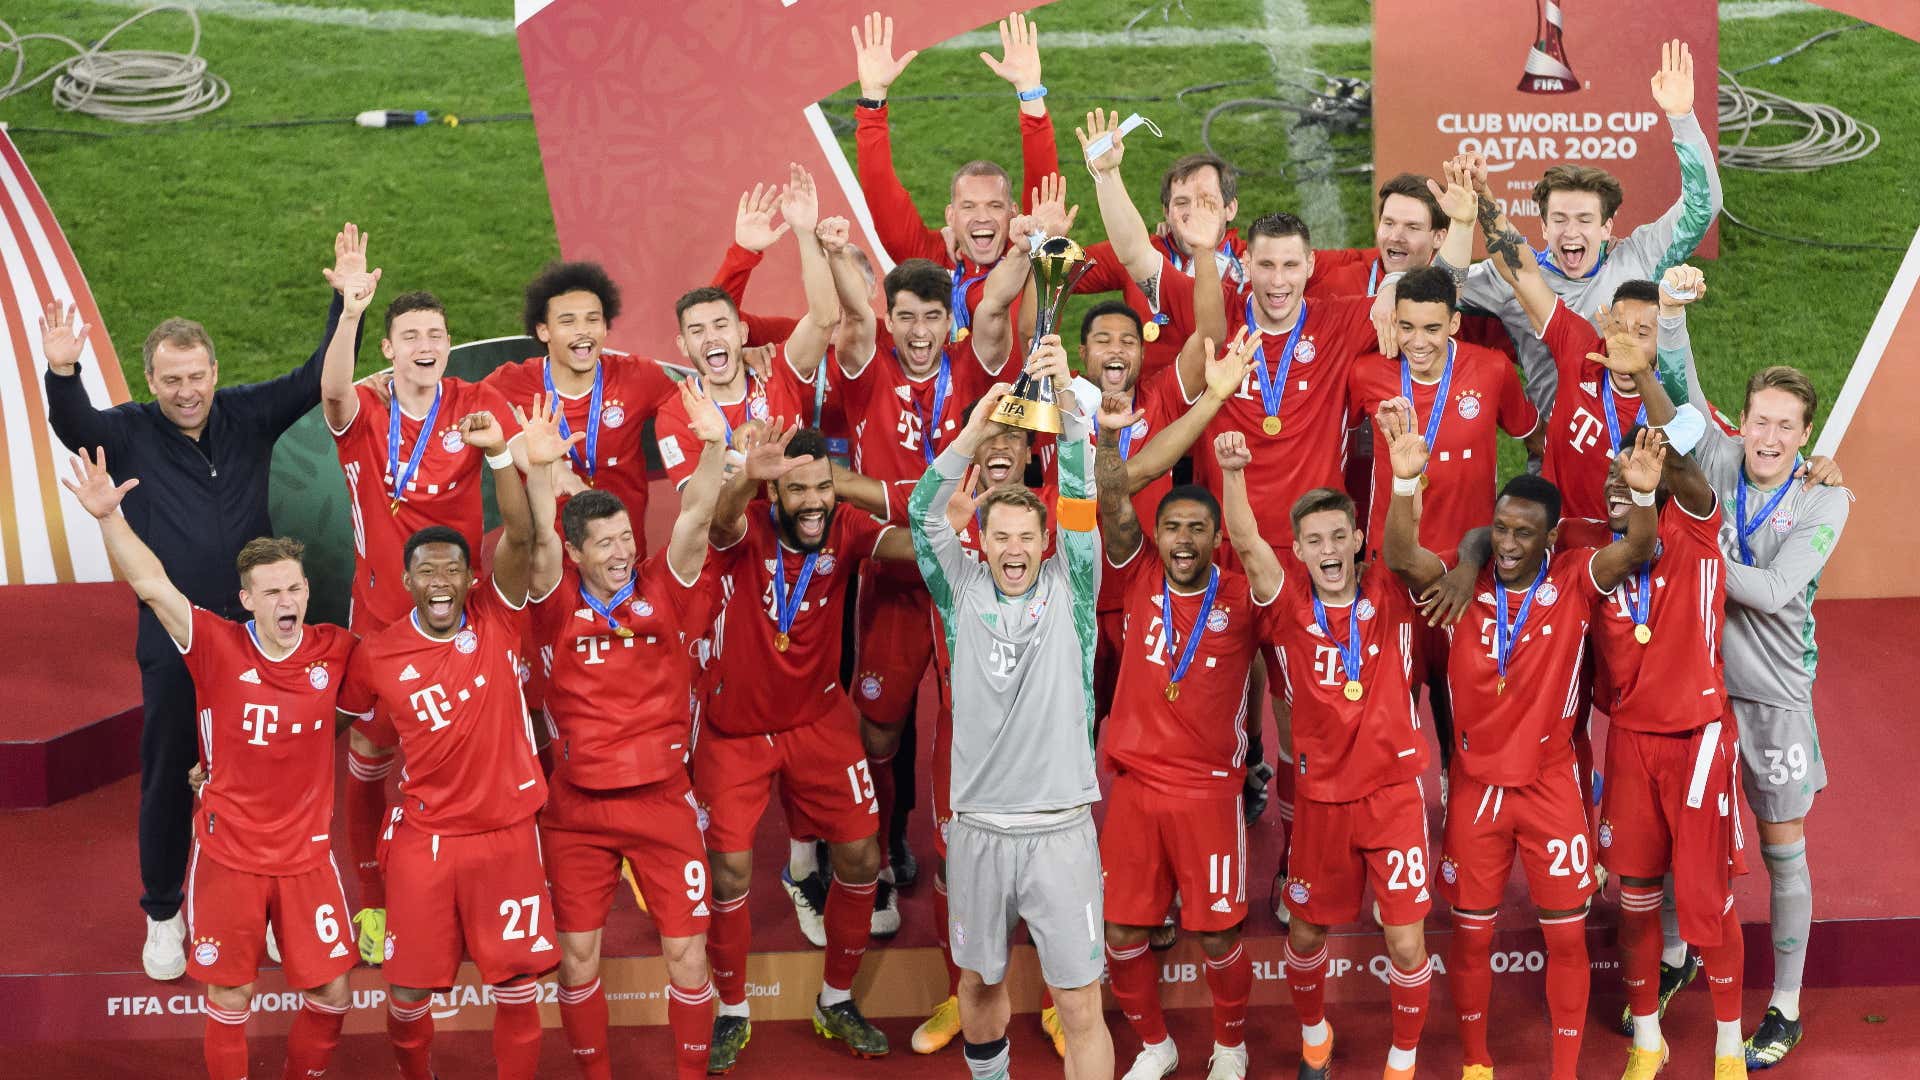 Bayern Munich, Club World Cup winners 2020